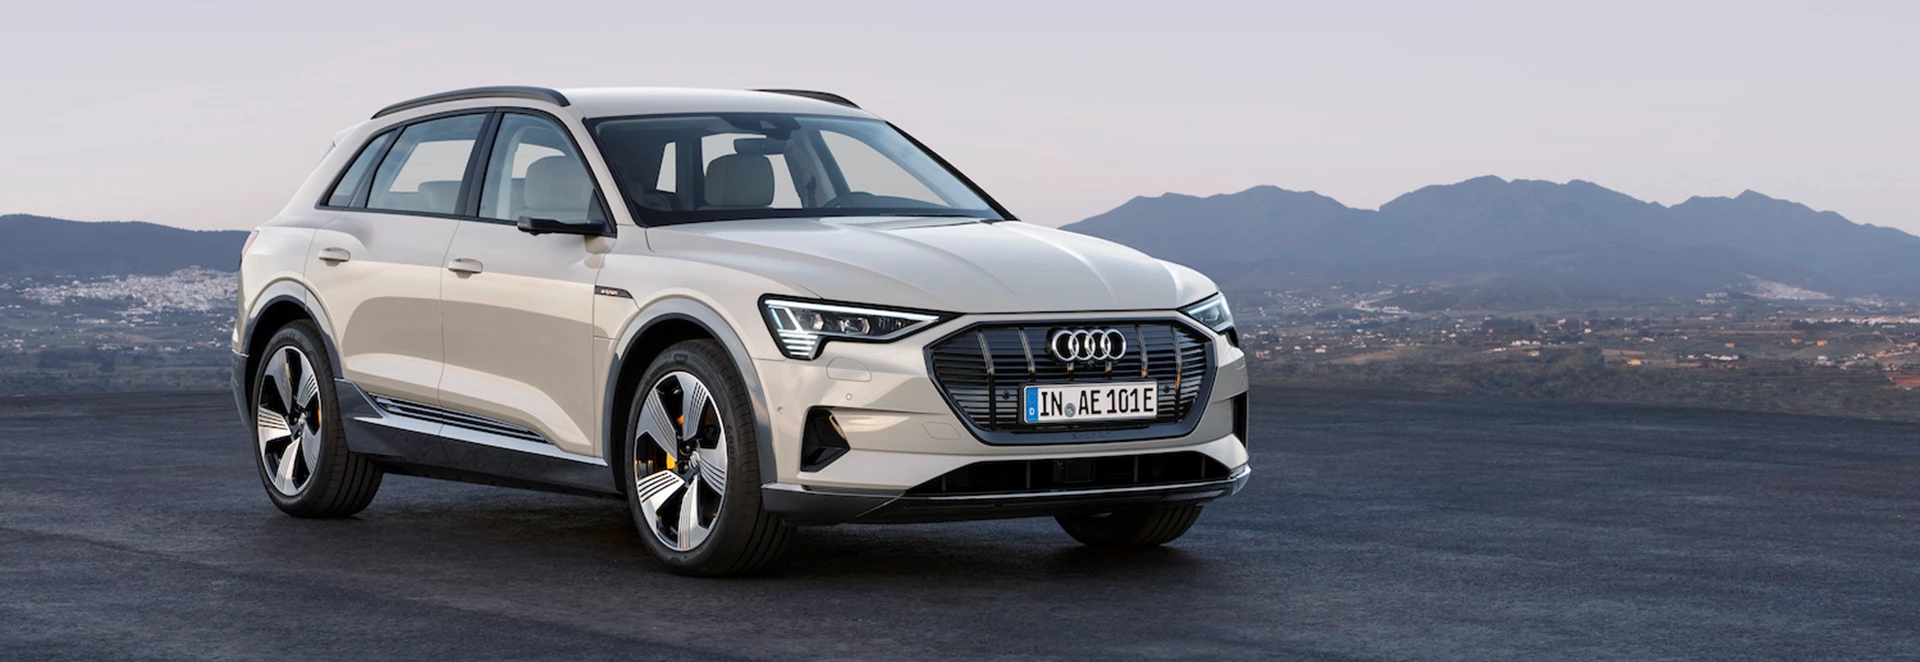 Audi e-tron 2019 review 